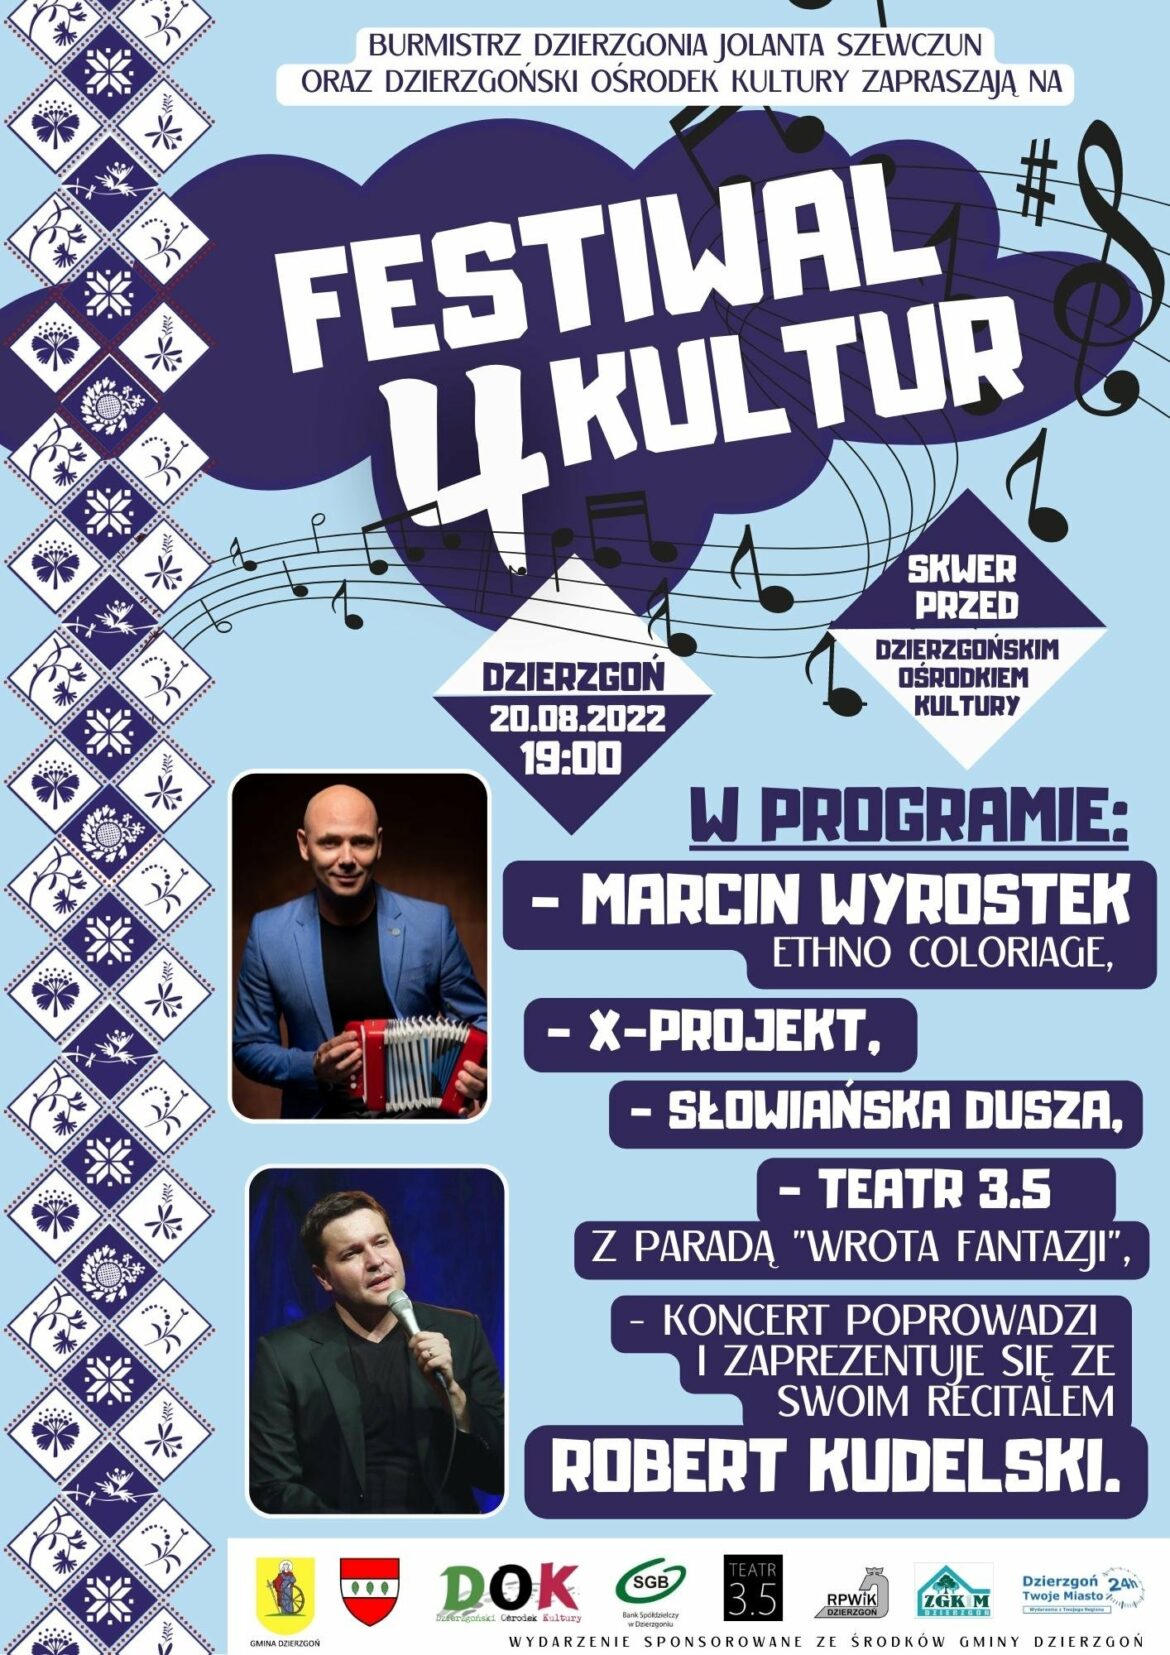 26 Festiwal 4 Kultur. Program.